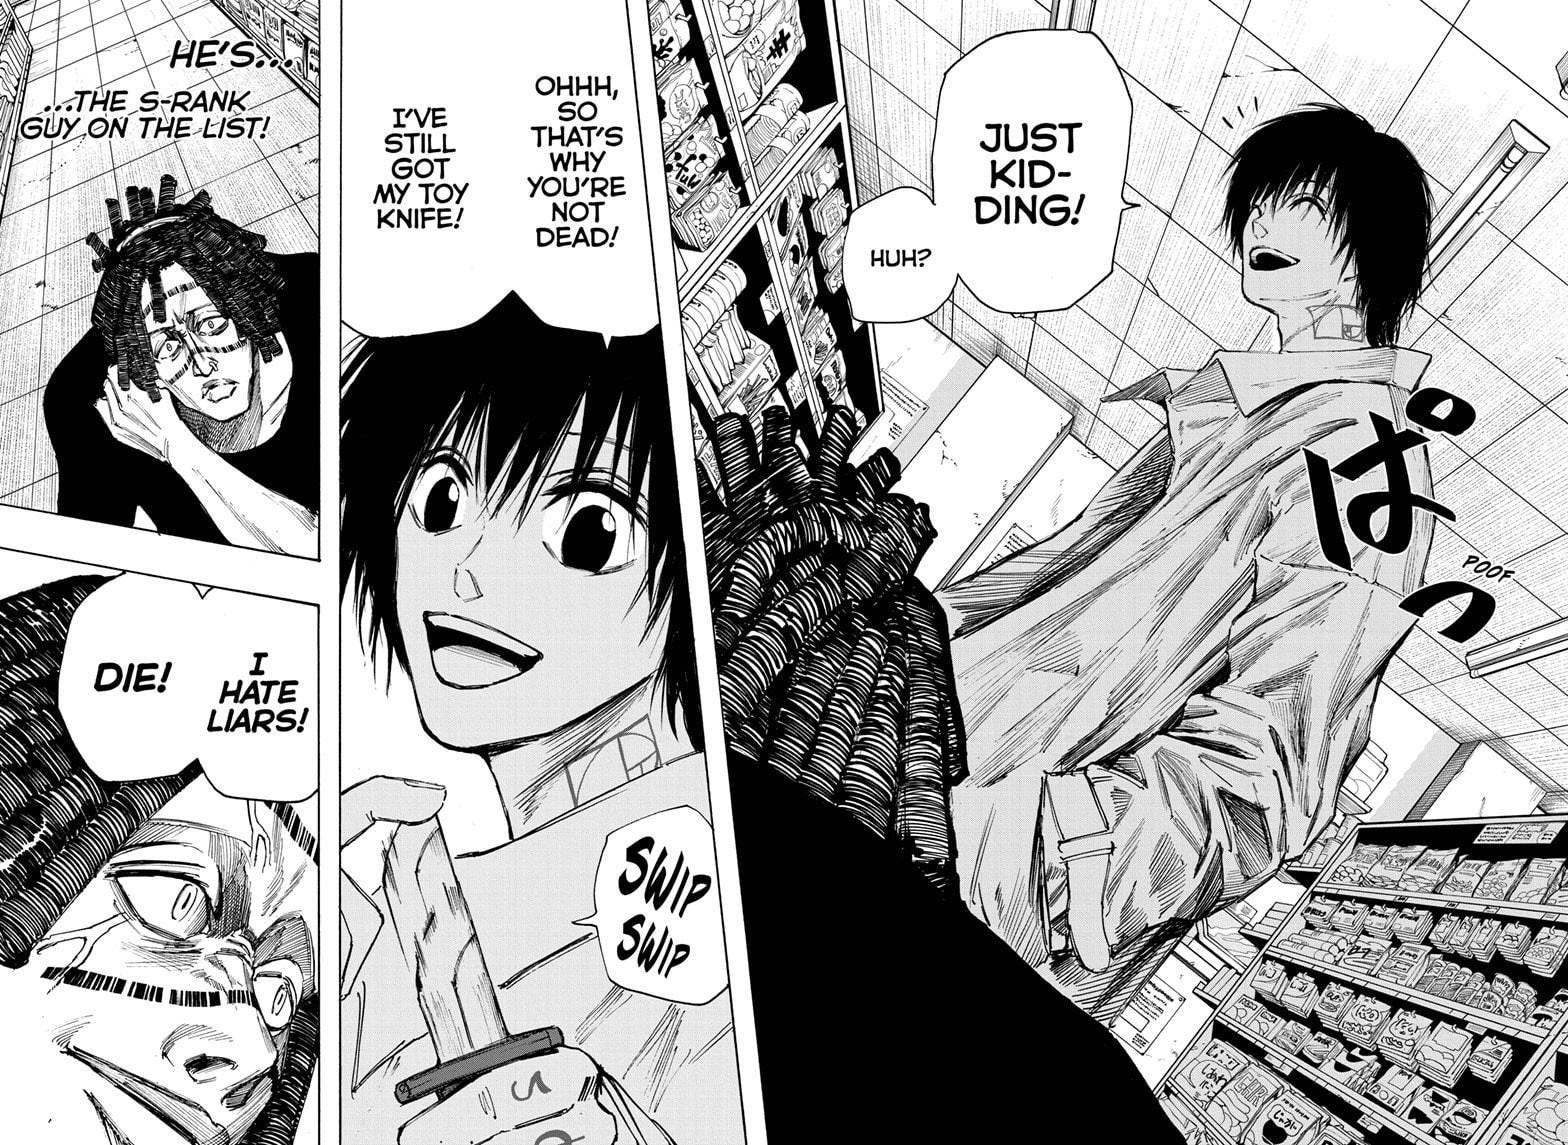 Shonen Jump's Assassin Manga Sakamoto Days Is Getting An Anime